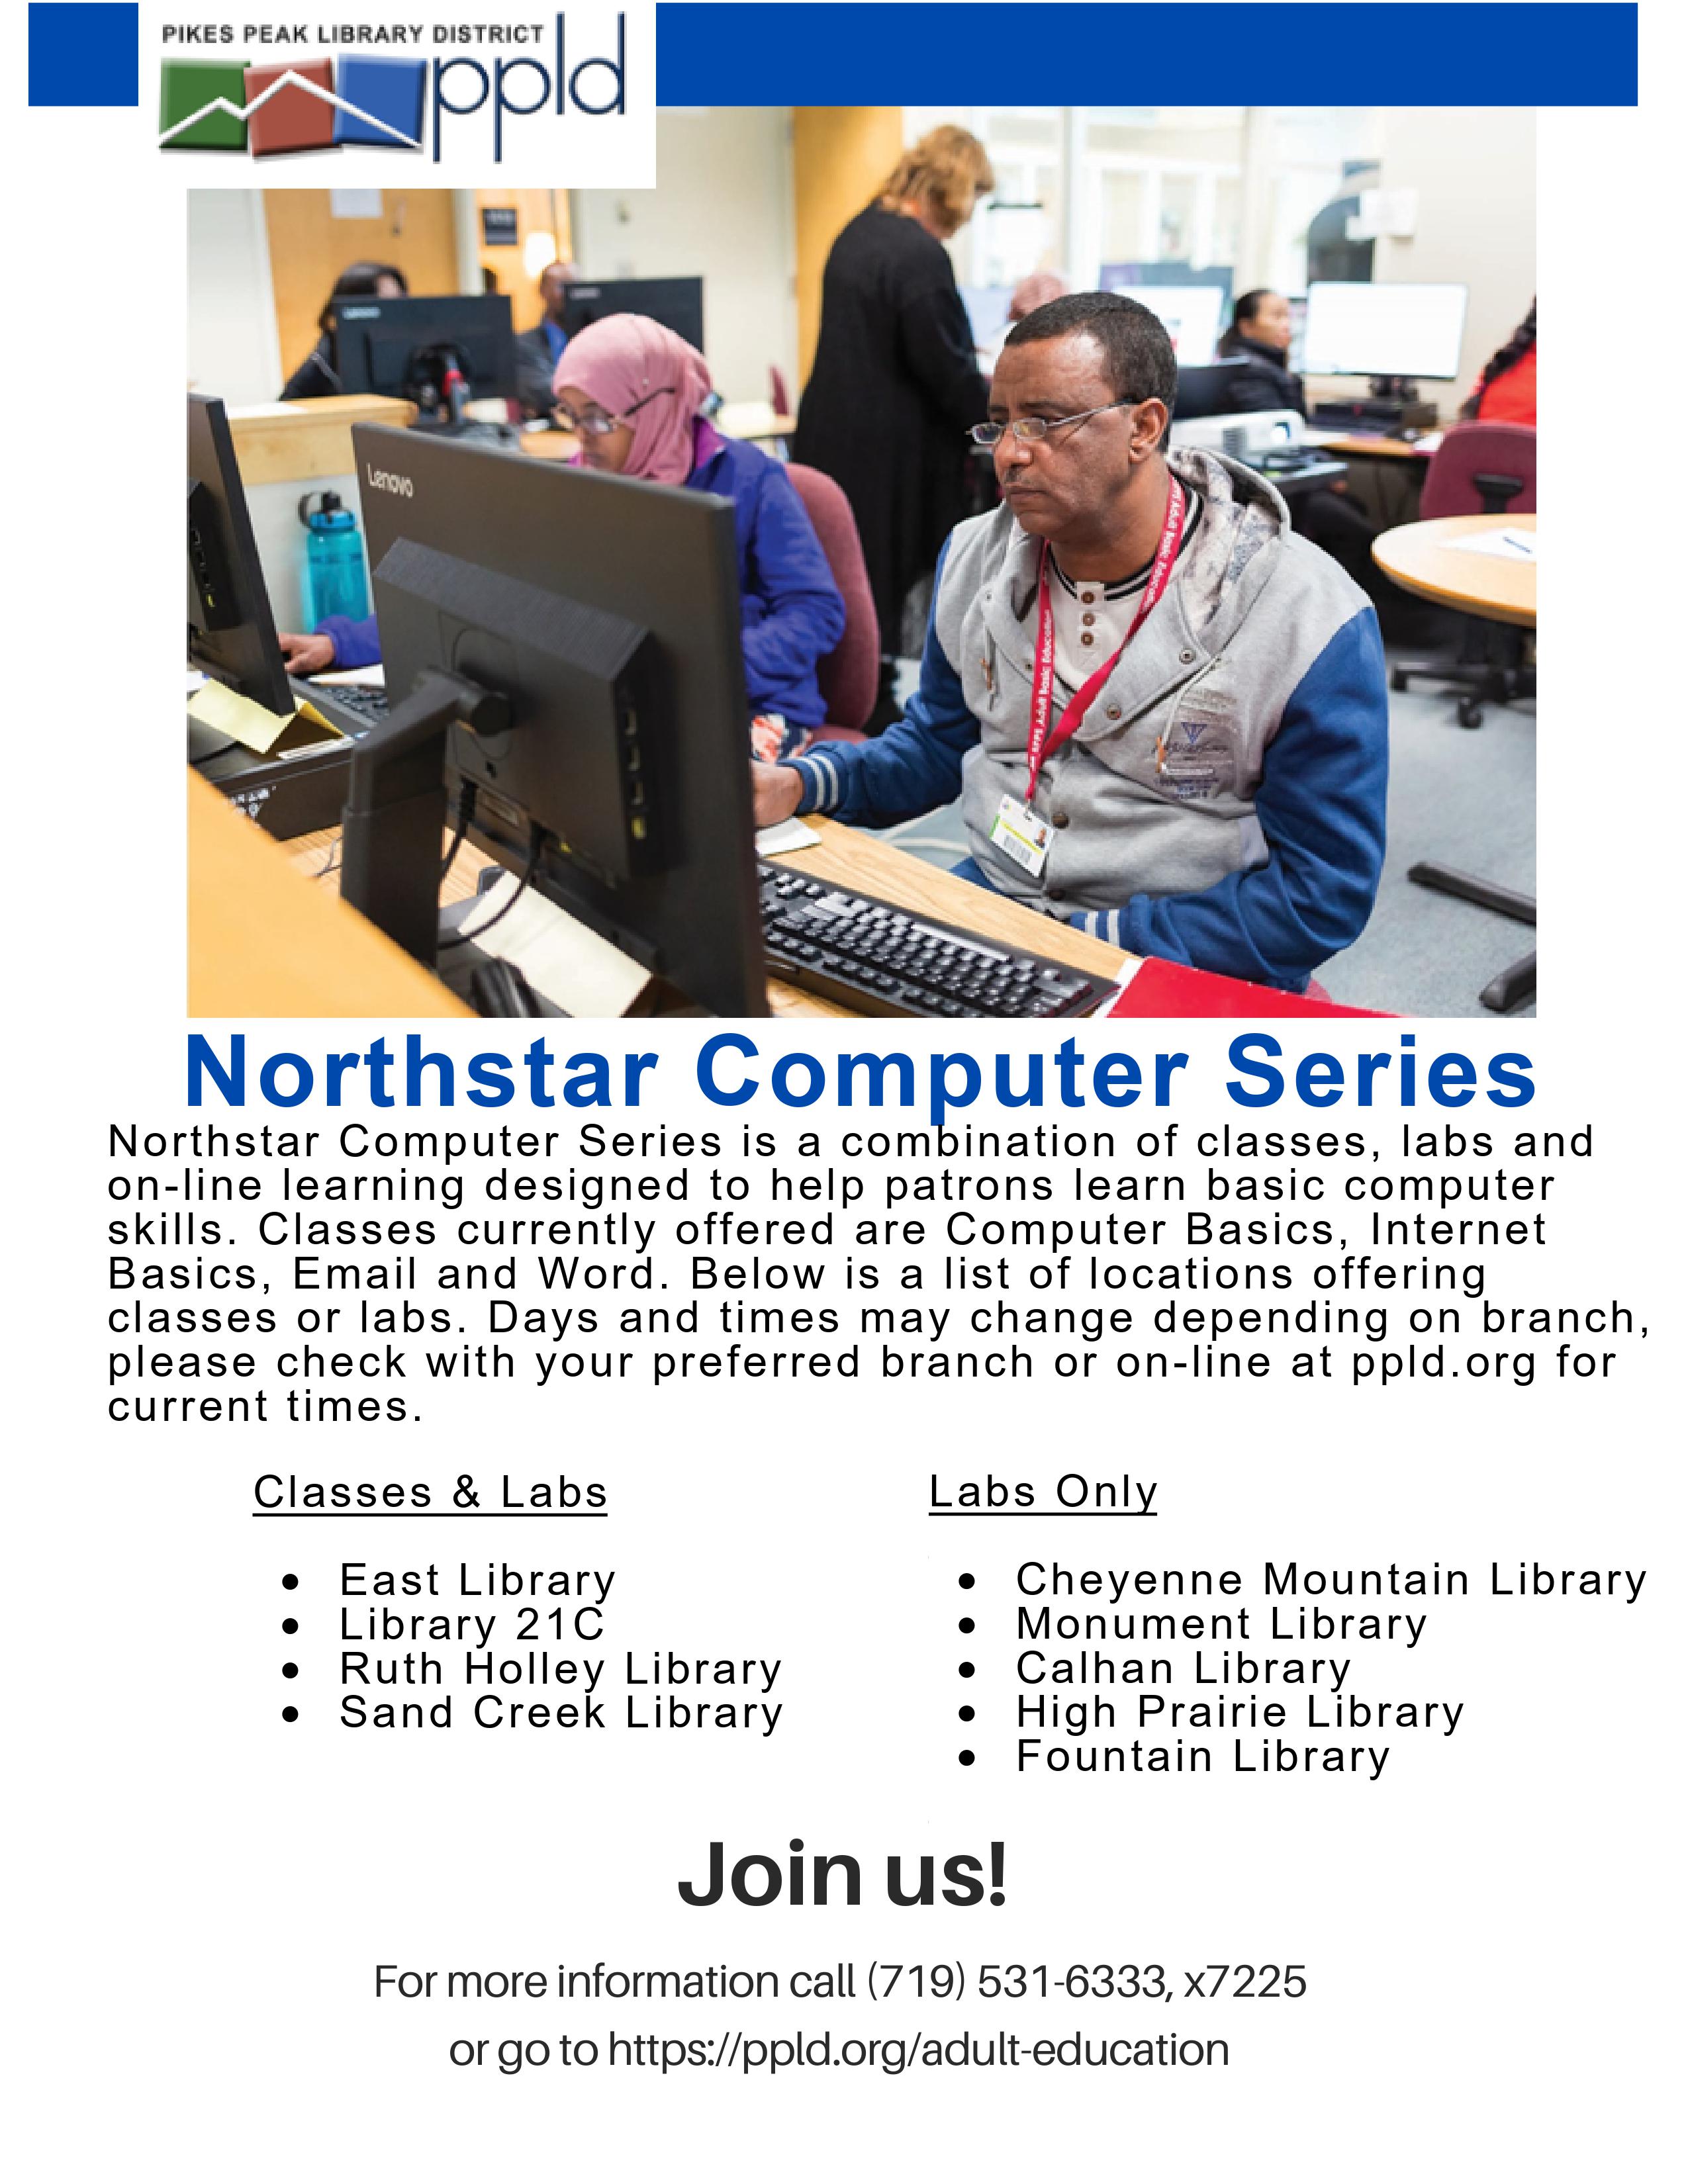 Northstar Computer Lab